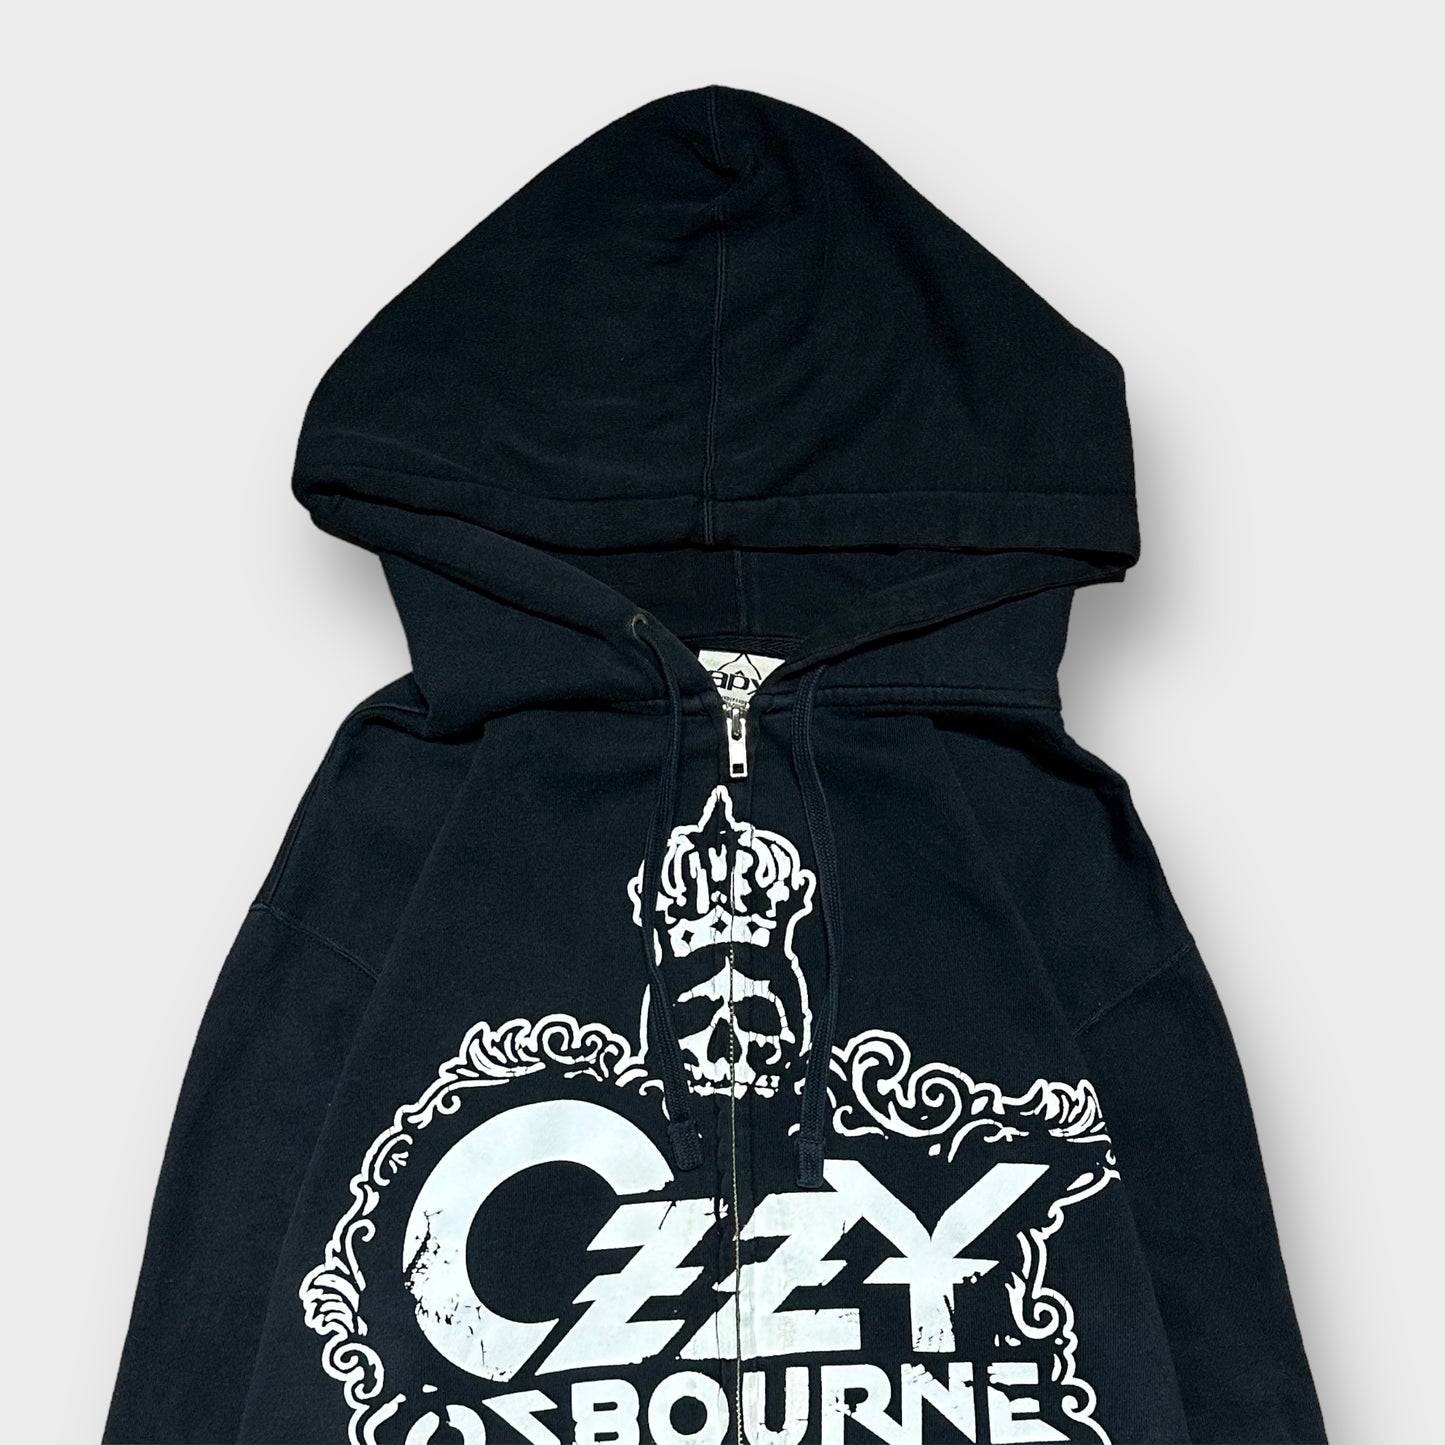 "Ozzy ozbourne" band hoodie